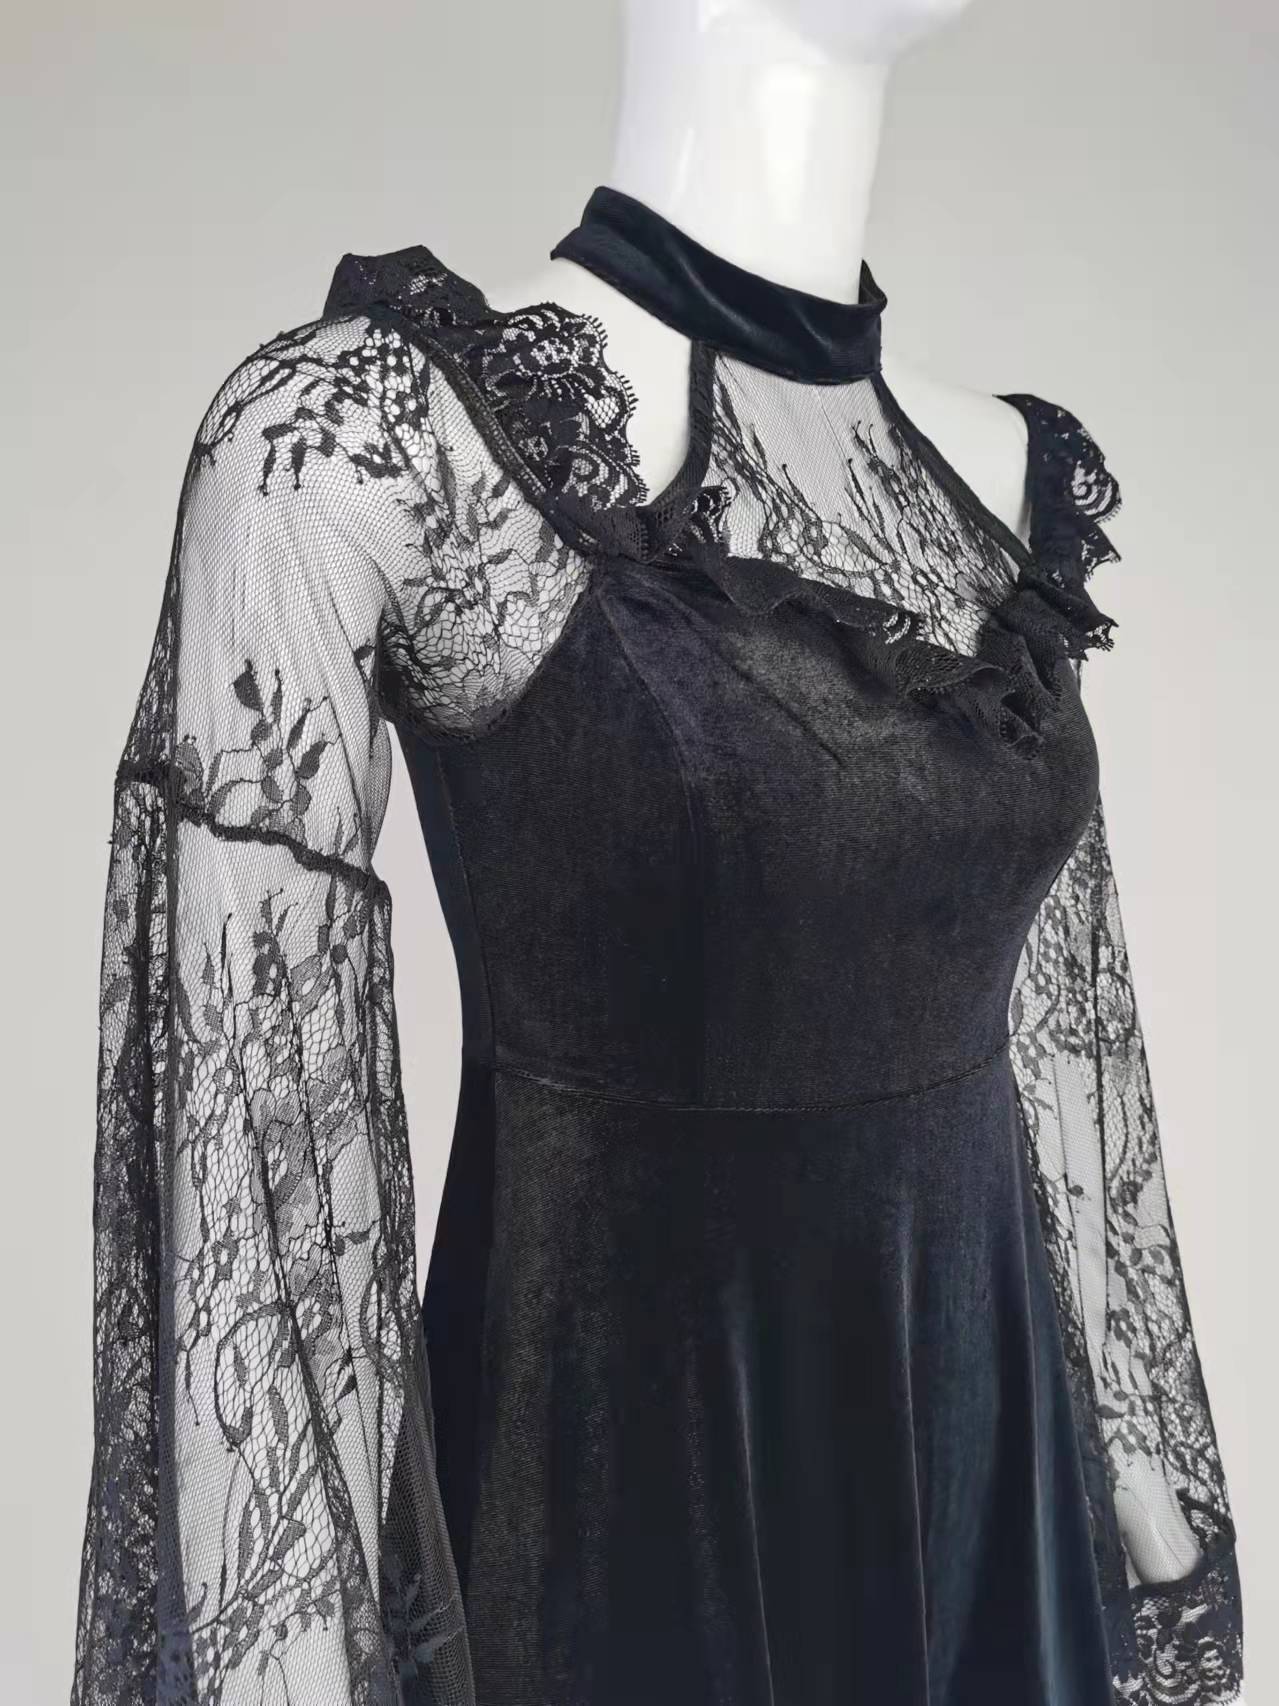 Maramalive™ Little Black Dress - Gothic Lace Panel Dress with Victorian elegance.